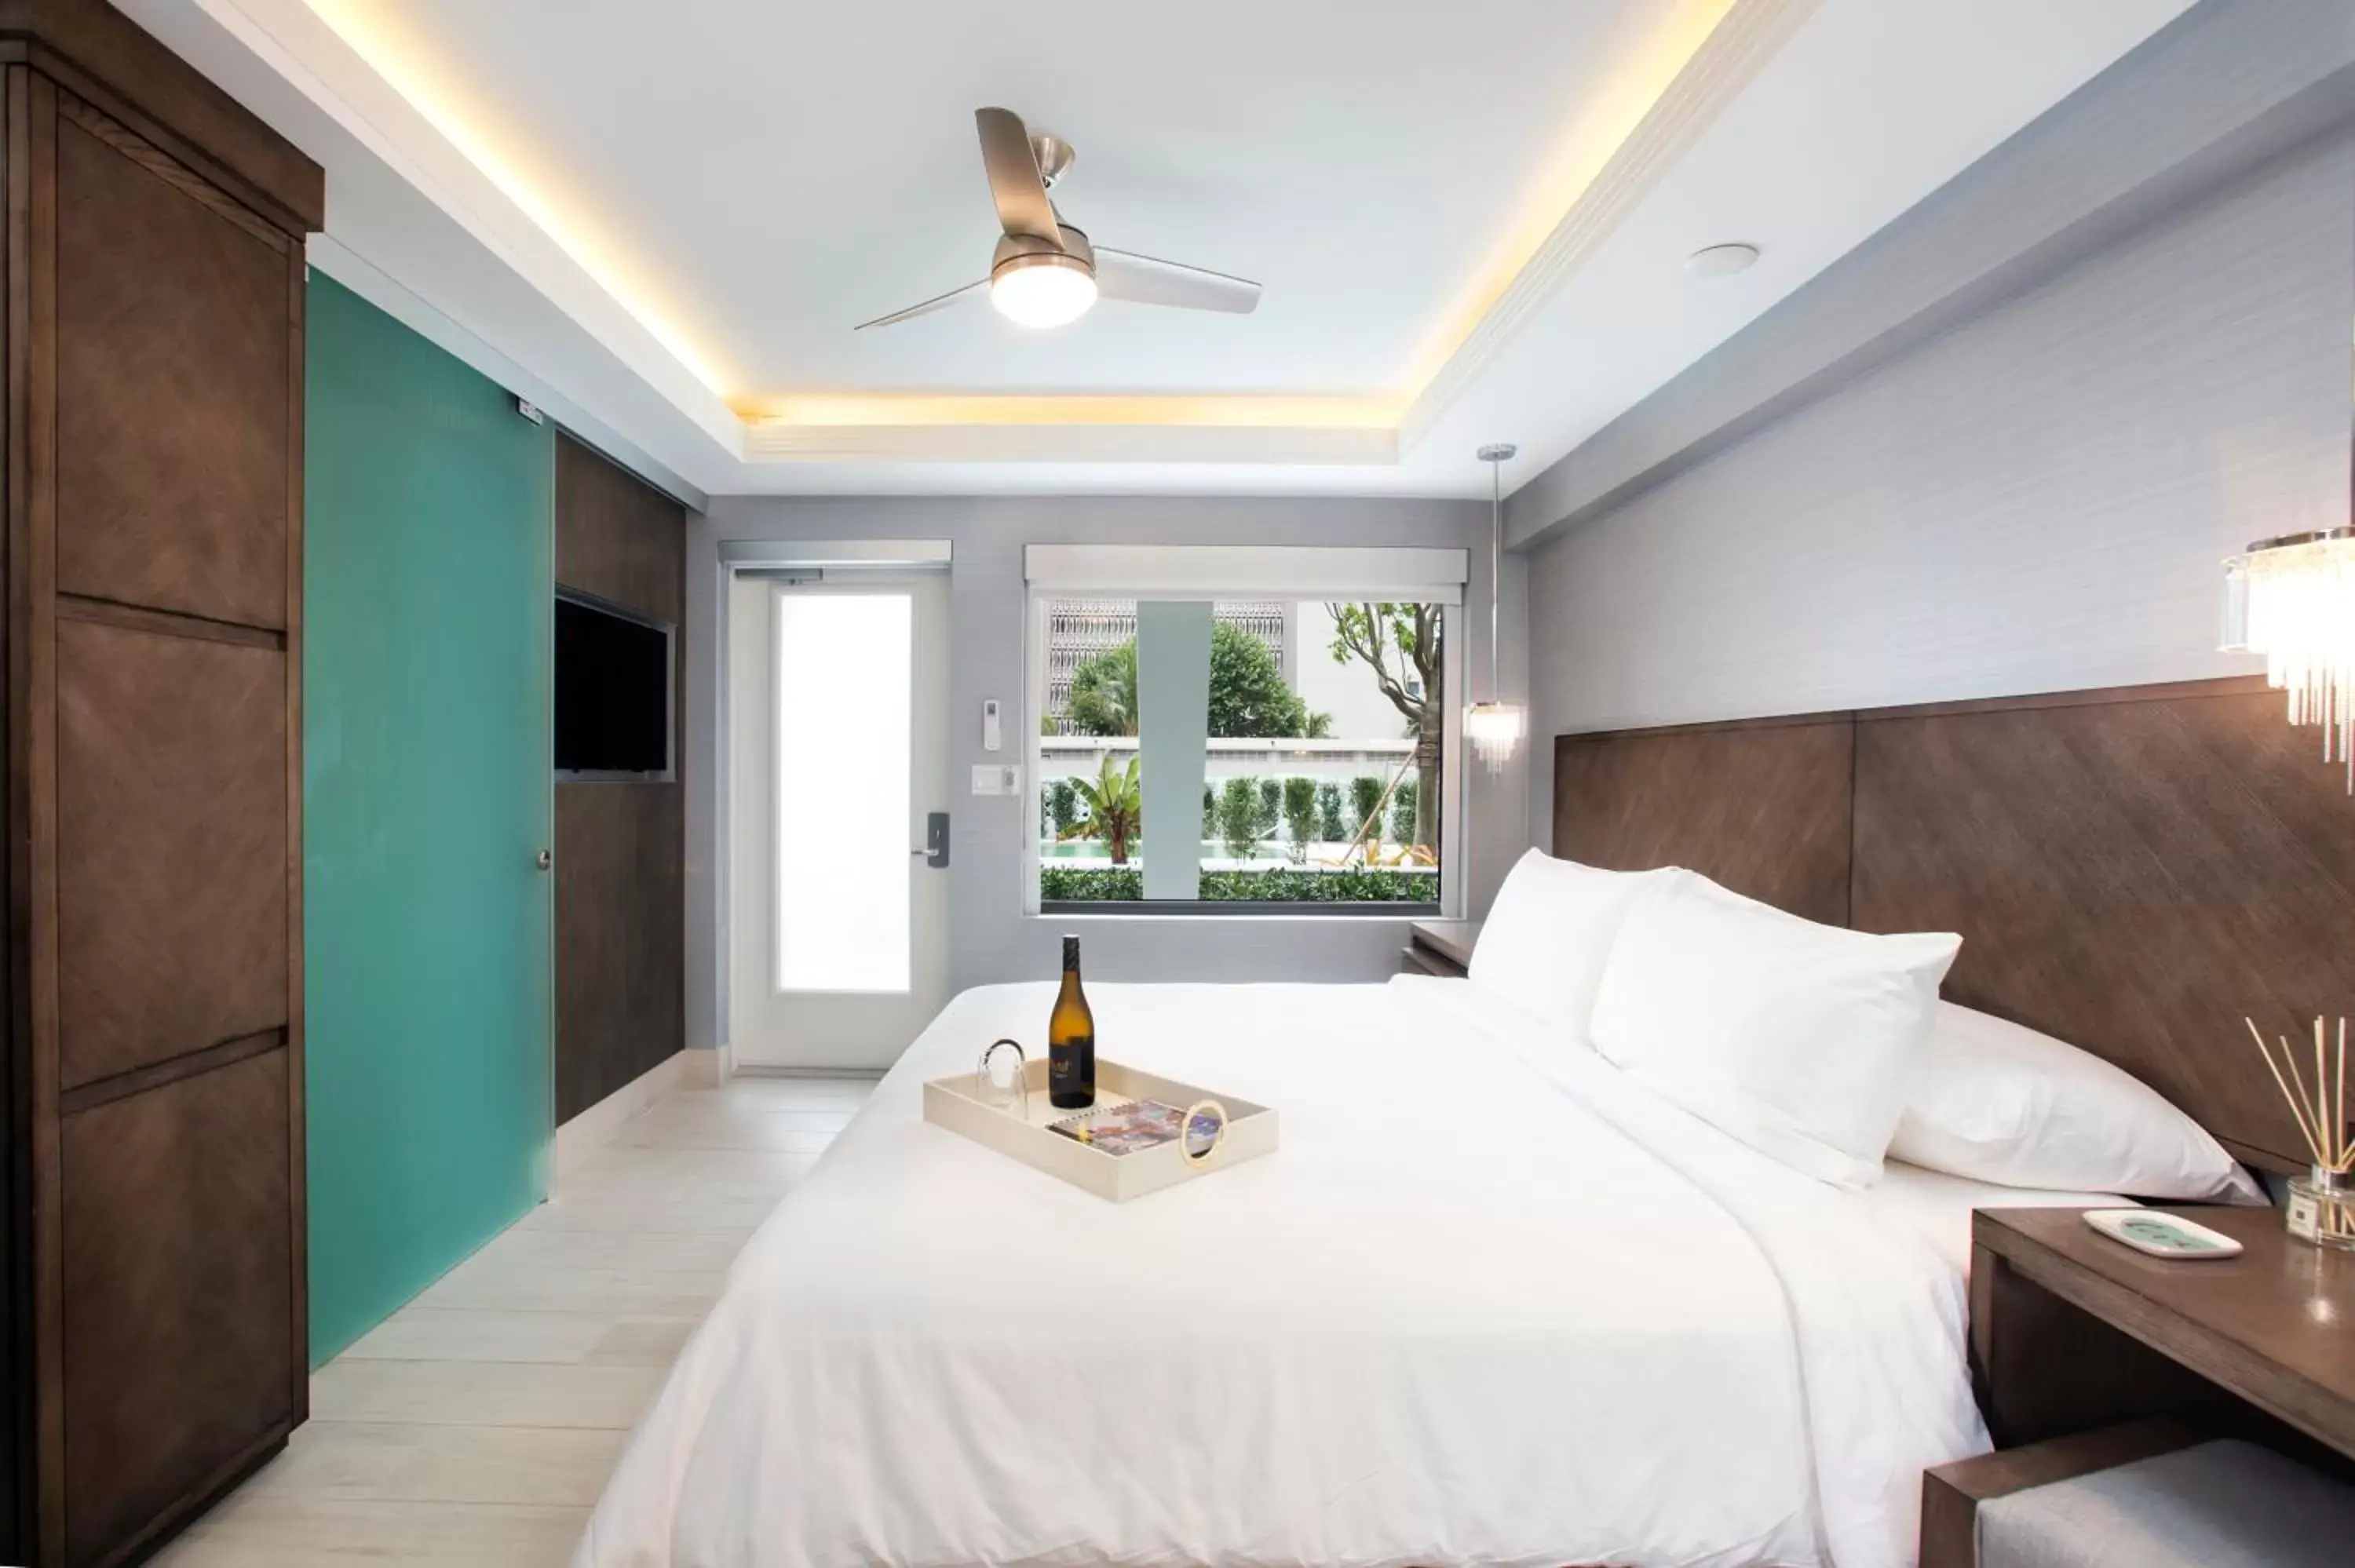 Bed, Room Photo in Elita Hotel